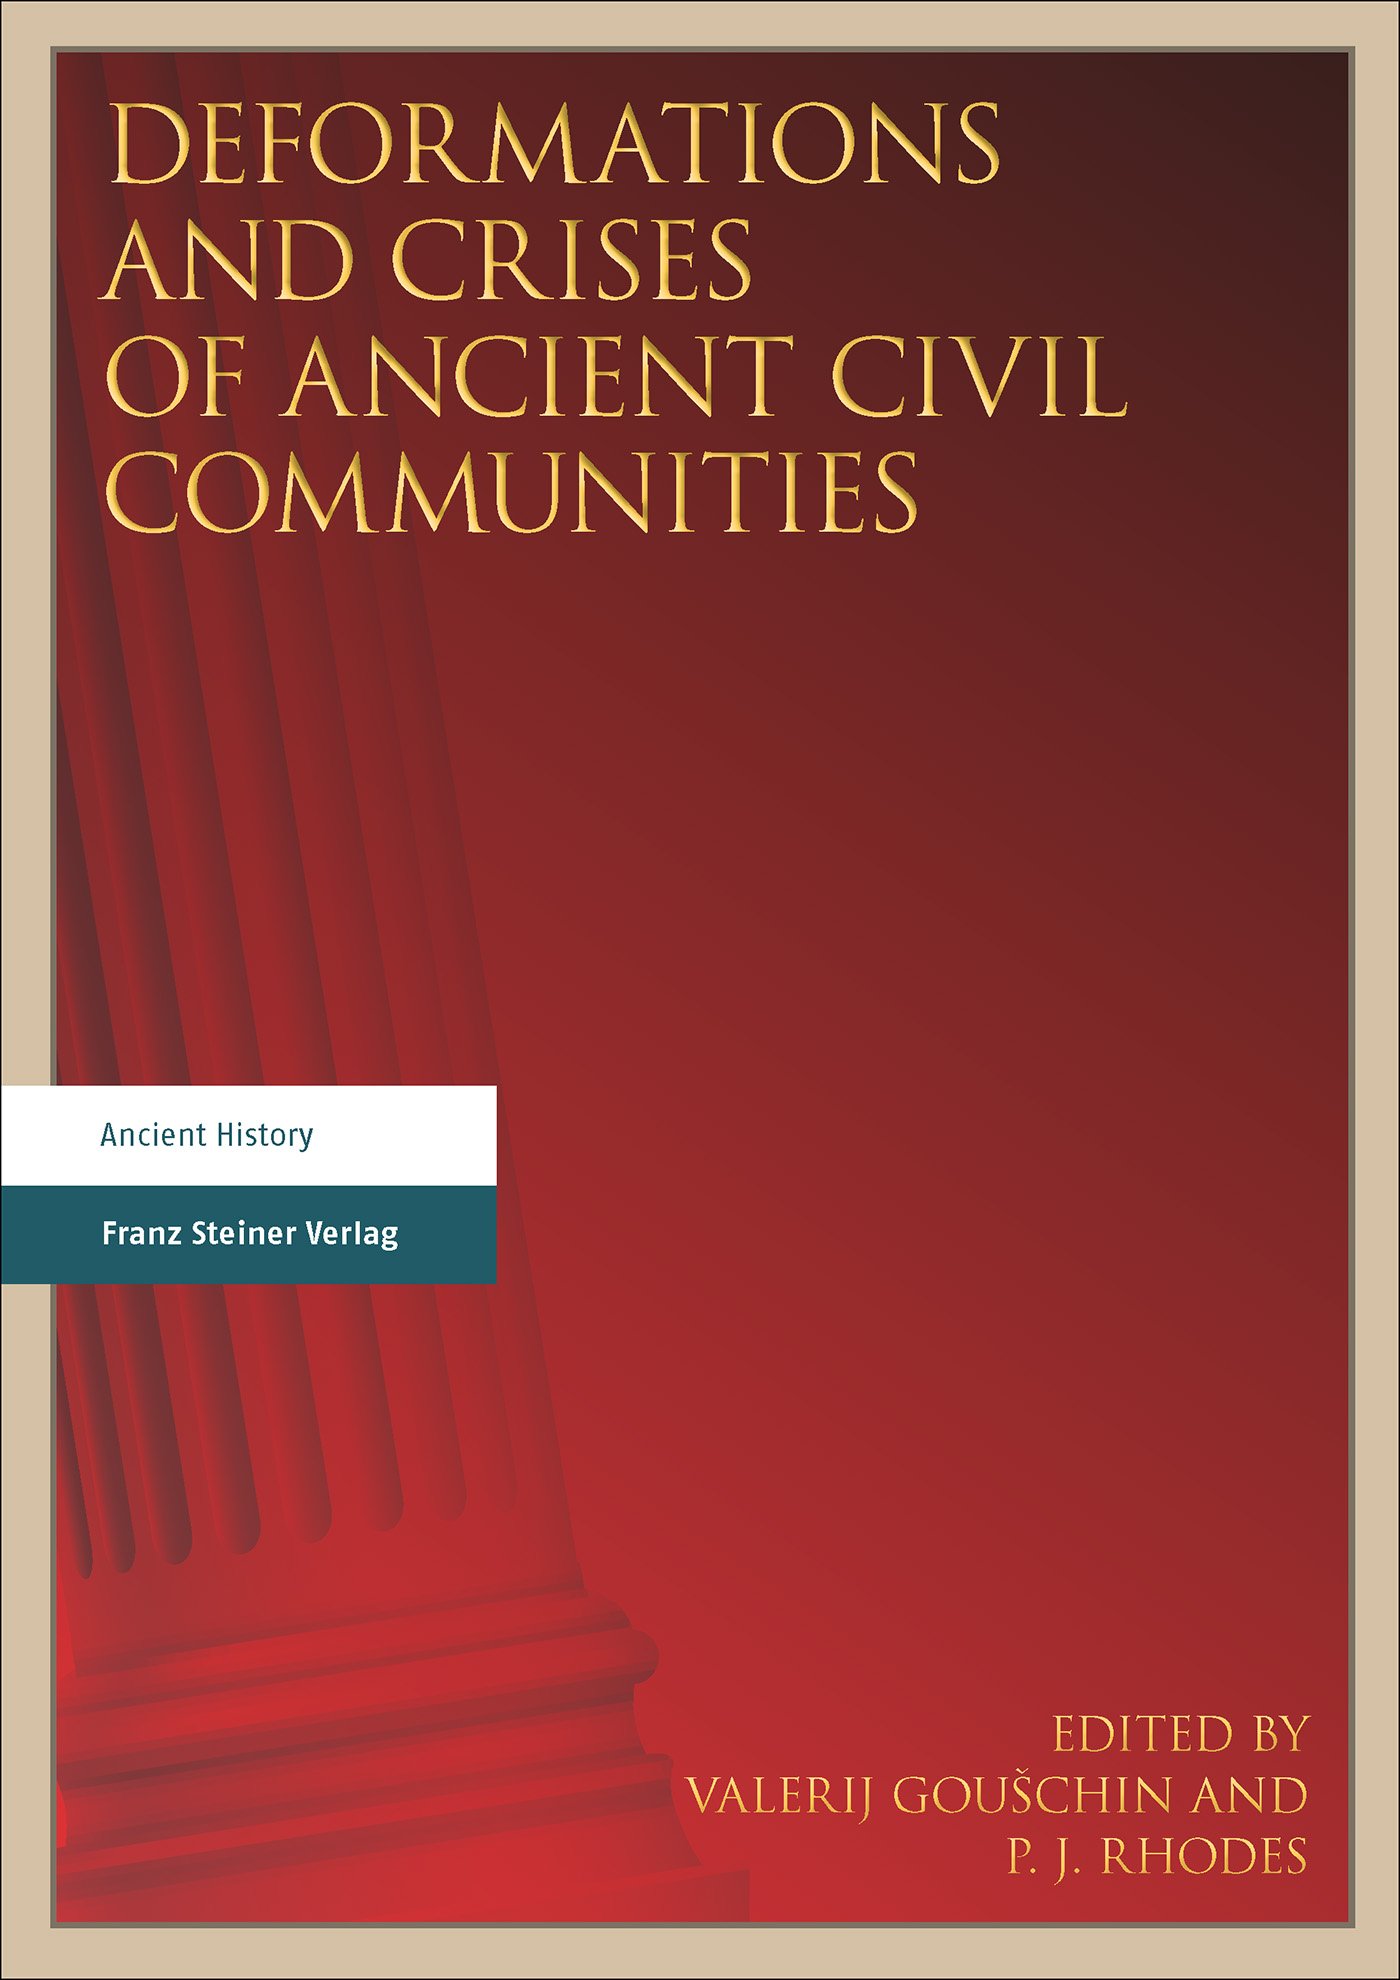 Deformations and Crises of Ancient Civil Communities